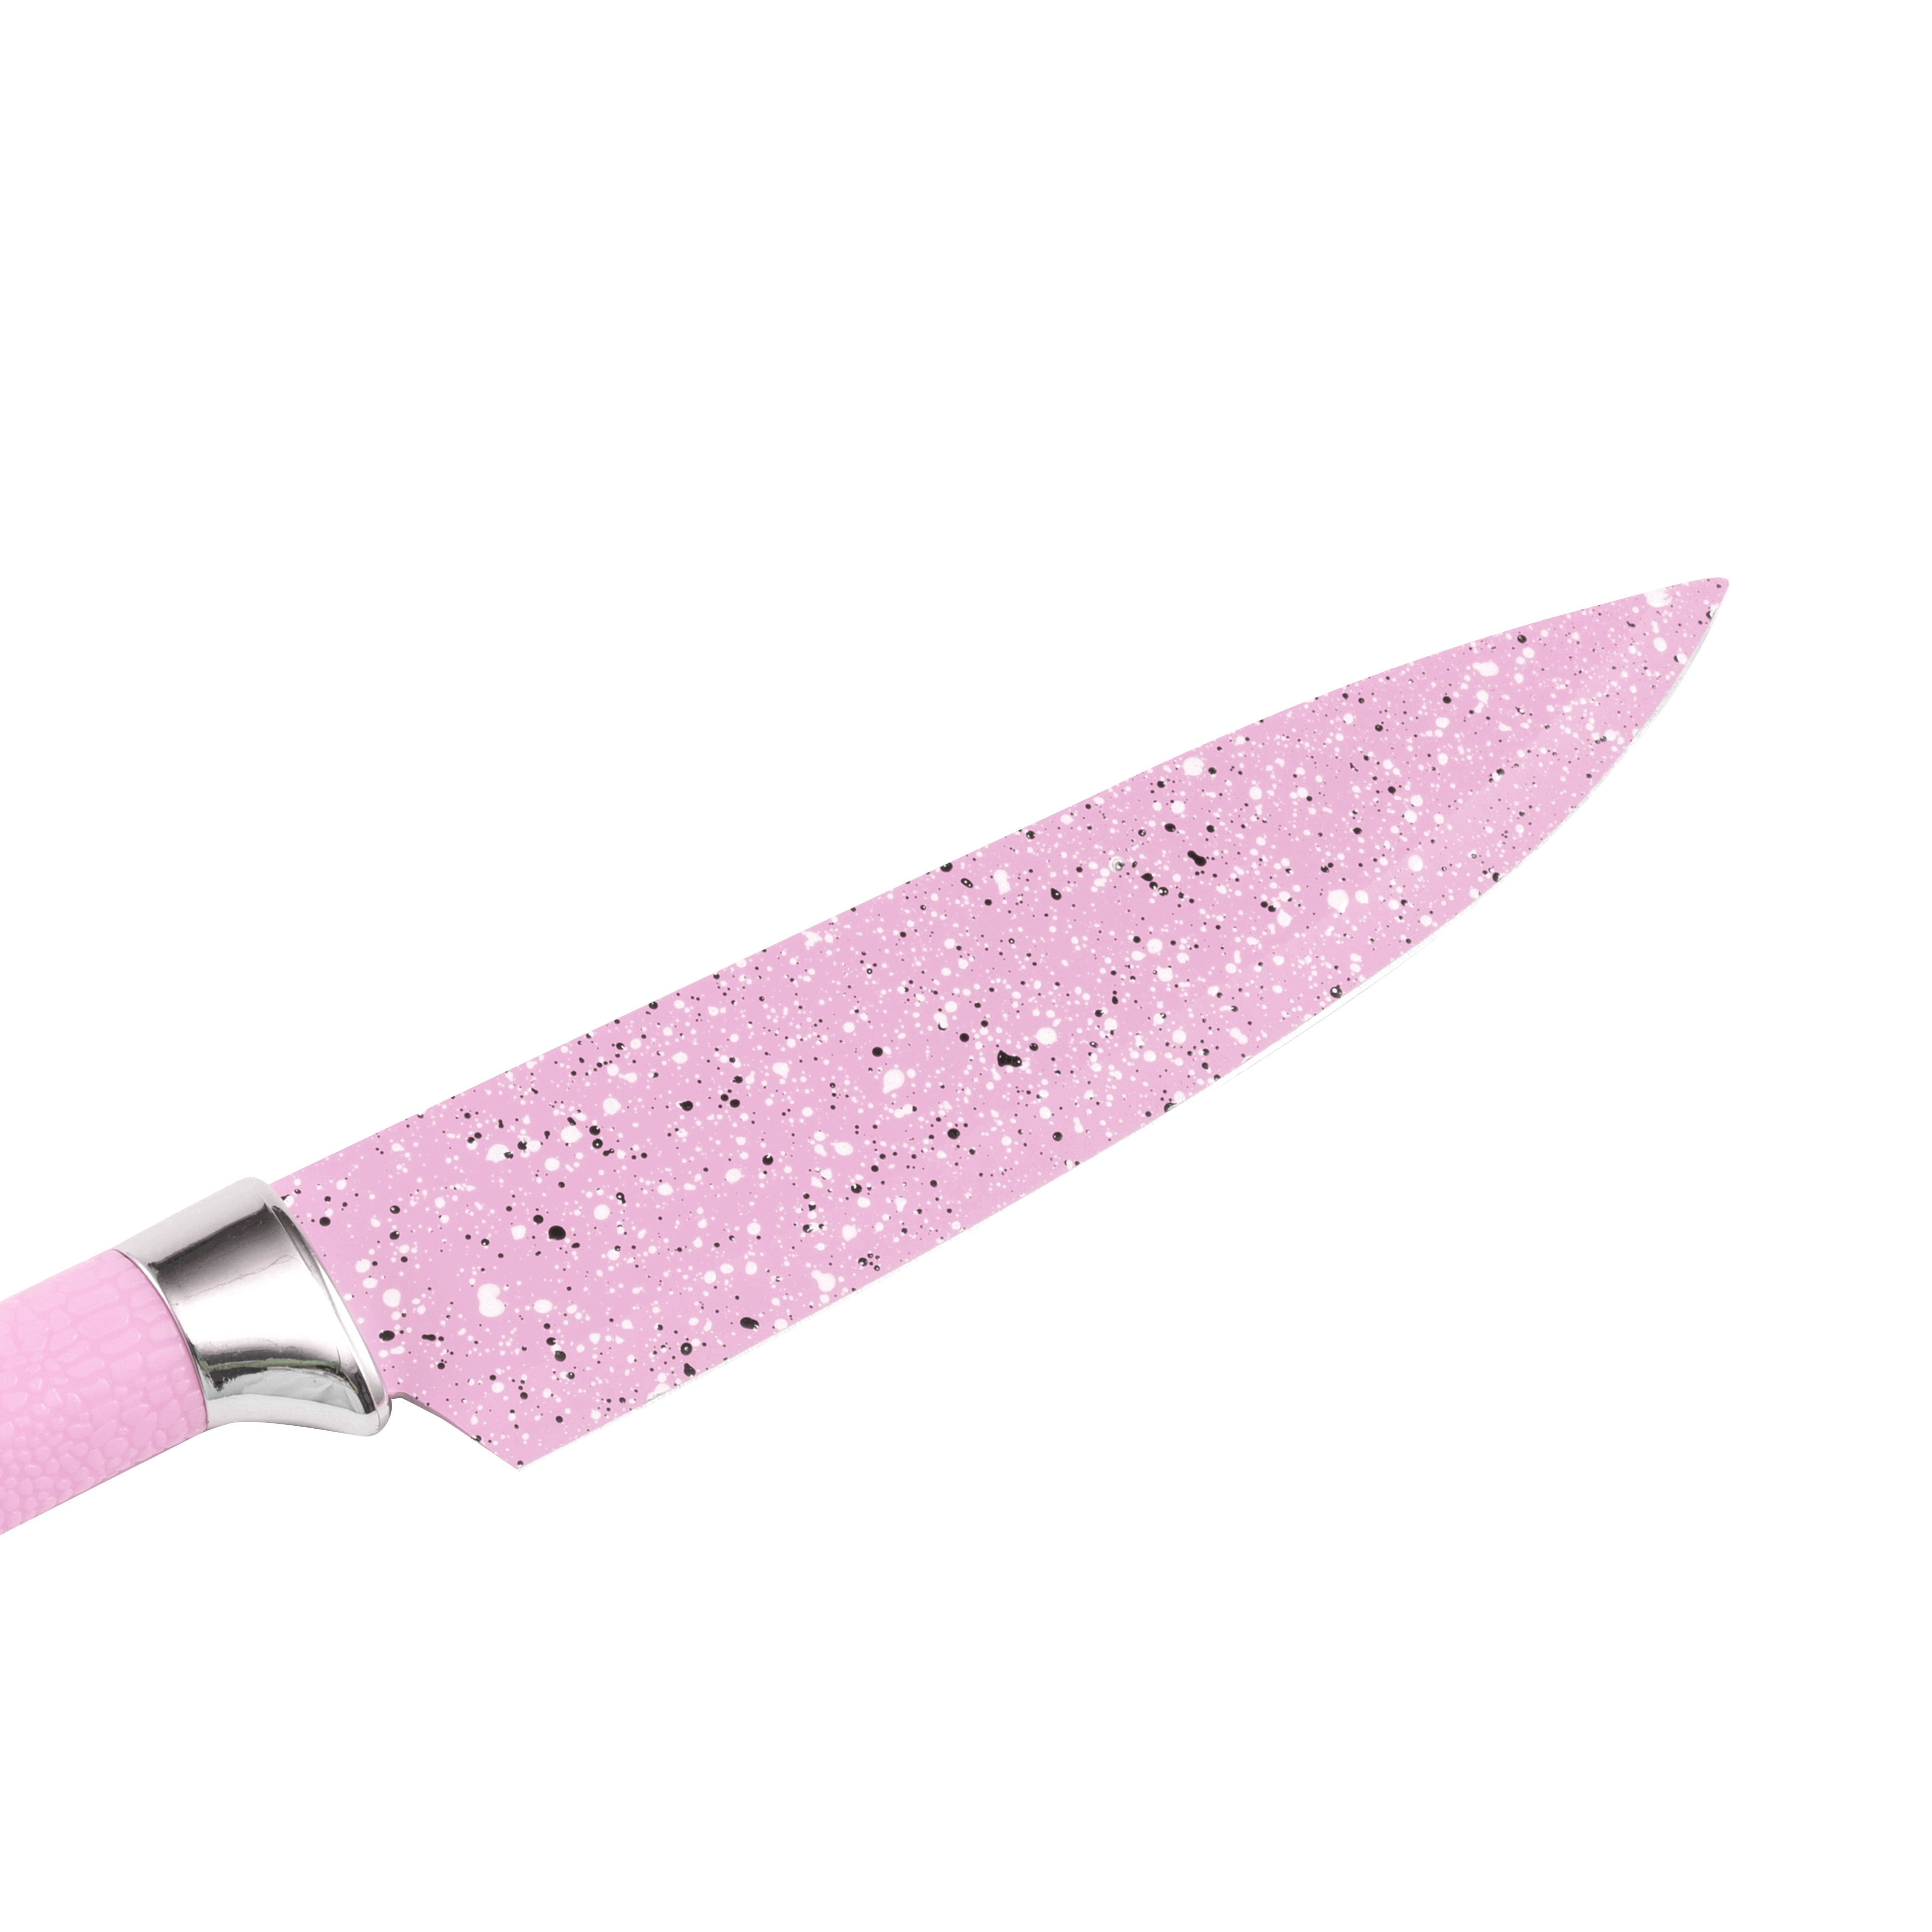 Bass Kitchen Knife Set Of 7 Piece - Pink